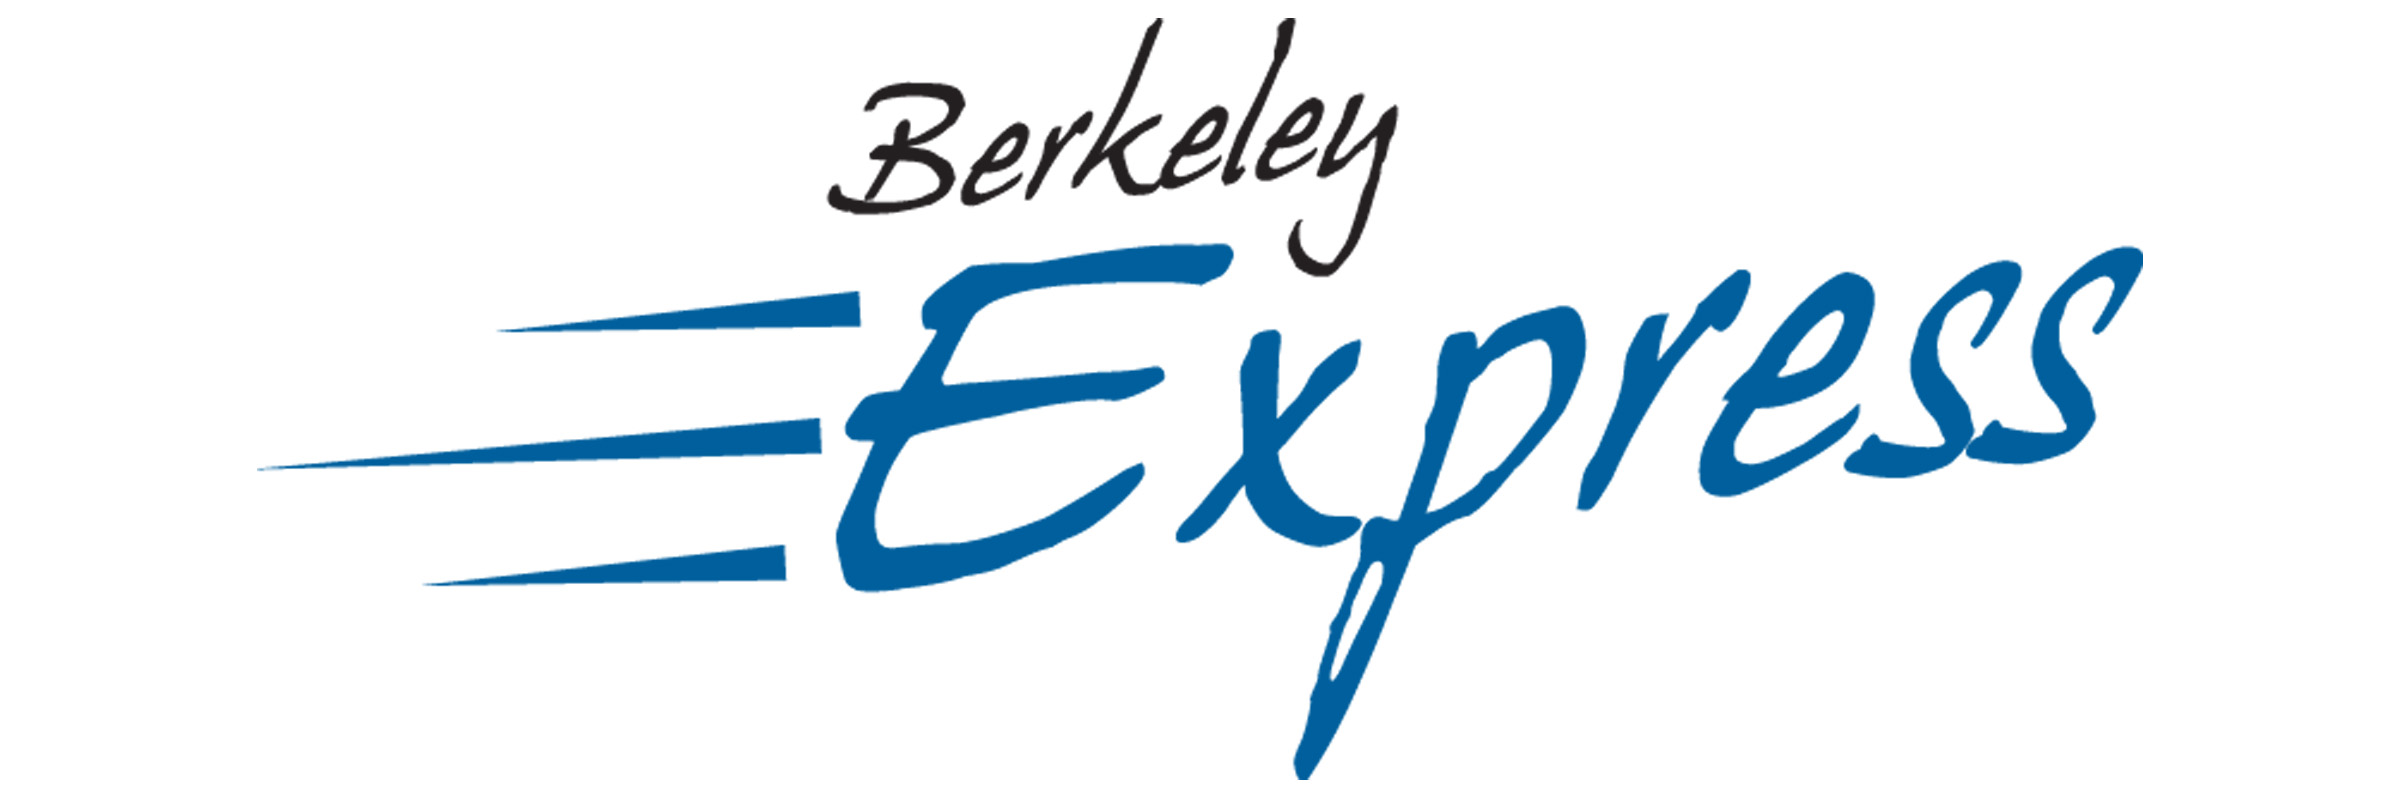 Berkeley Express